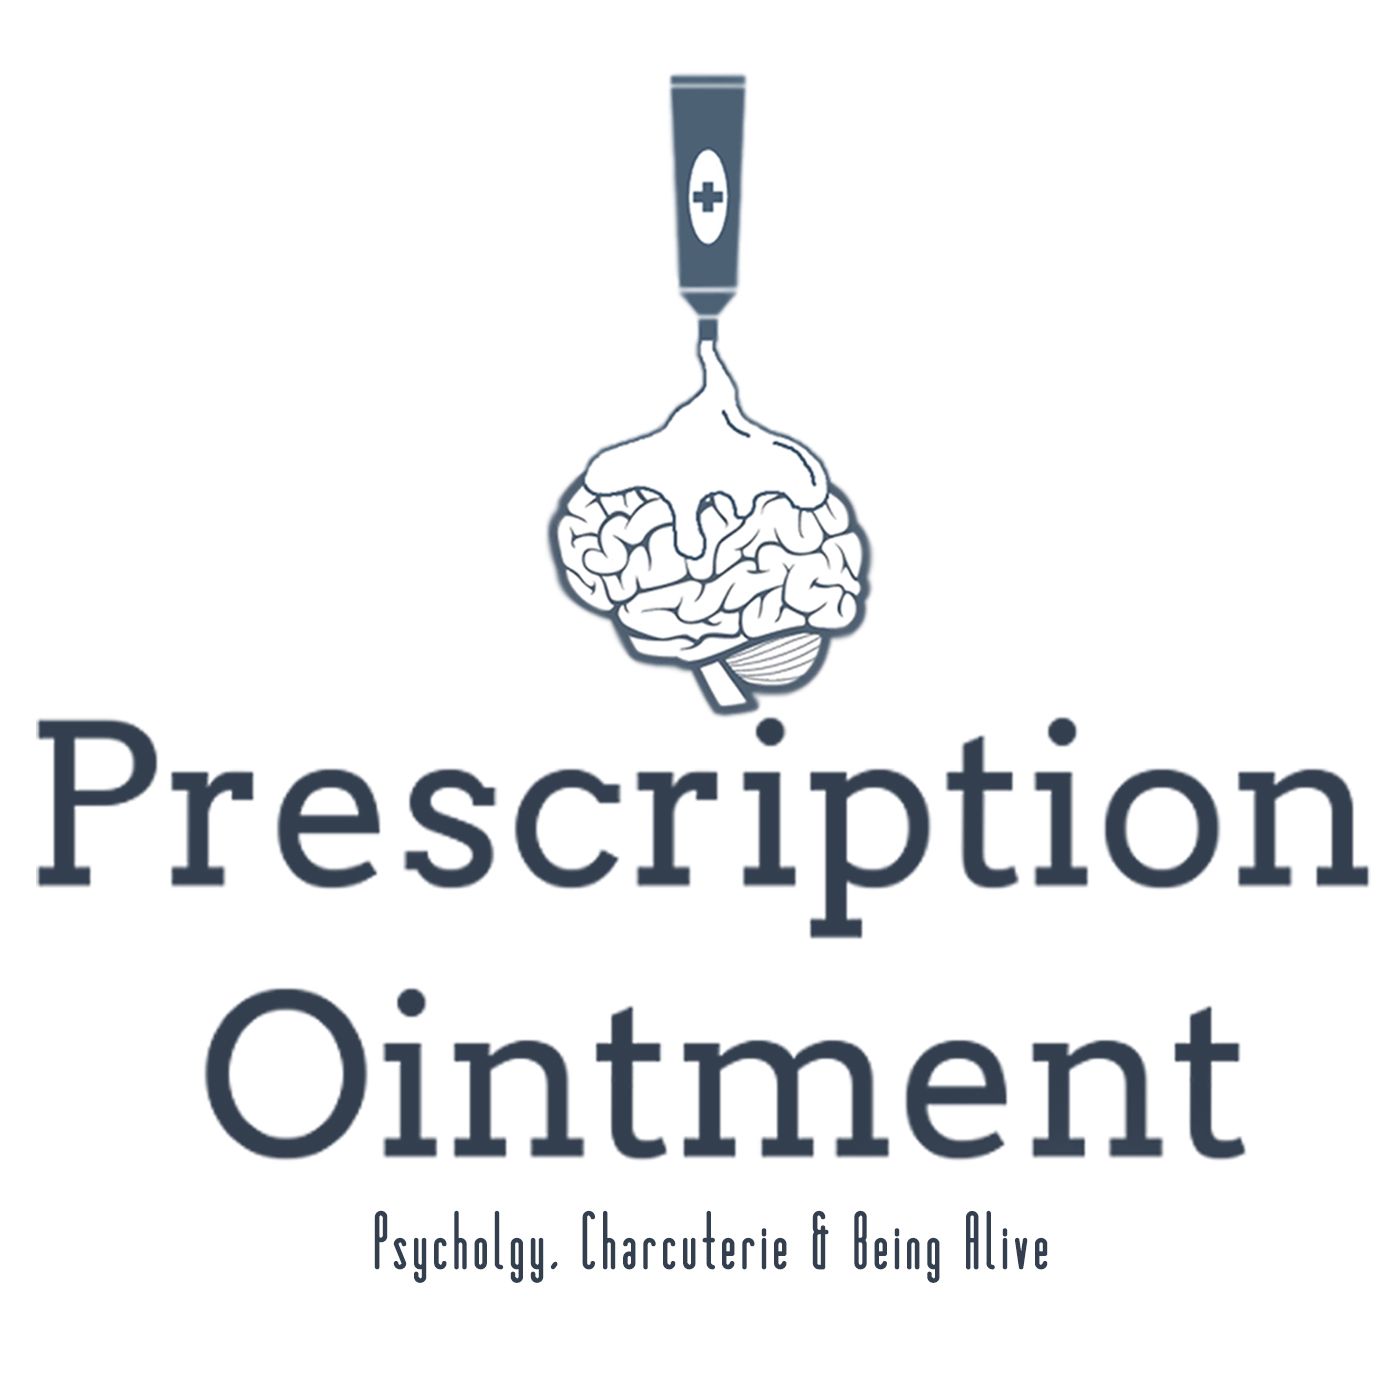 Prescription Ointment